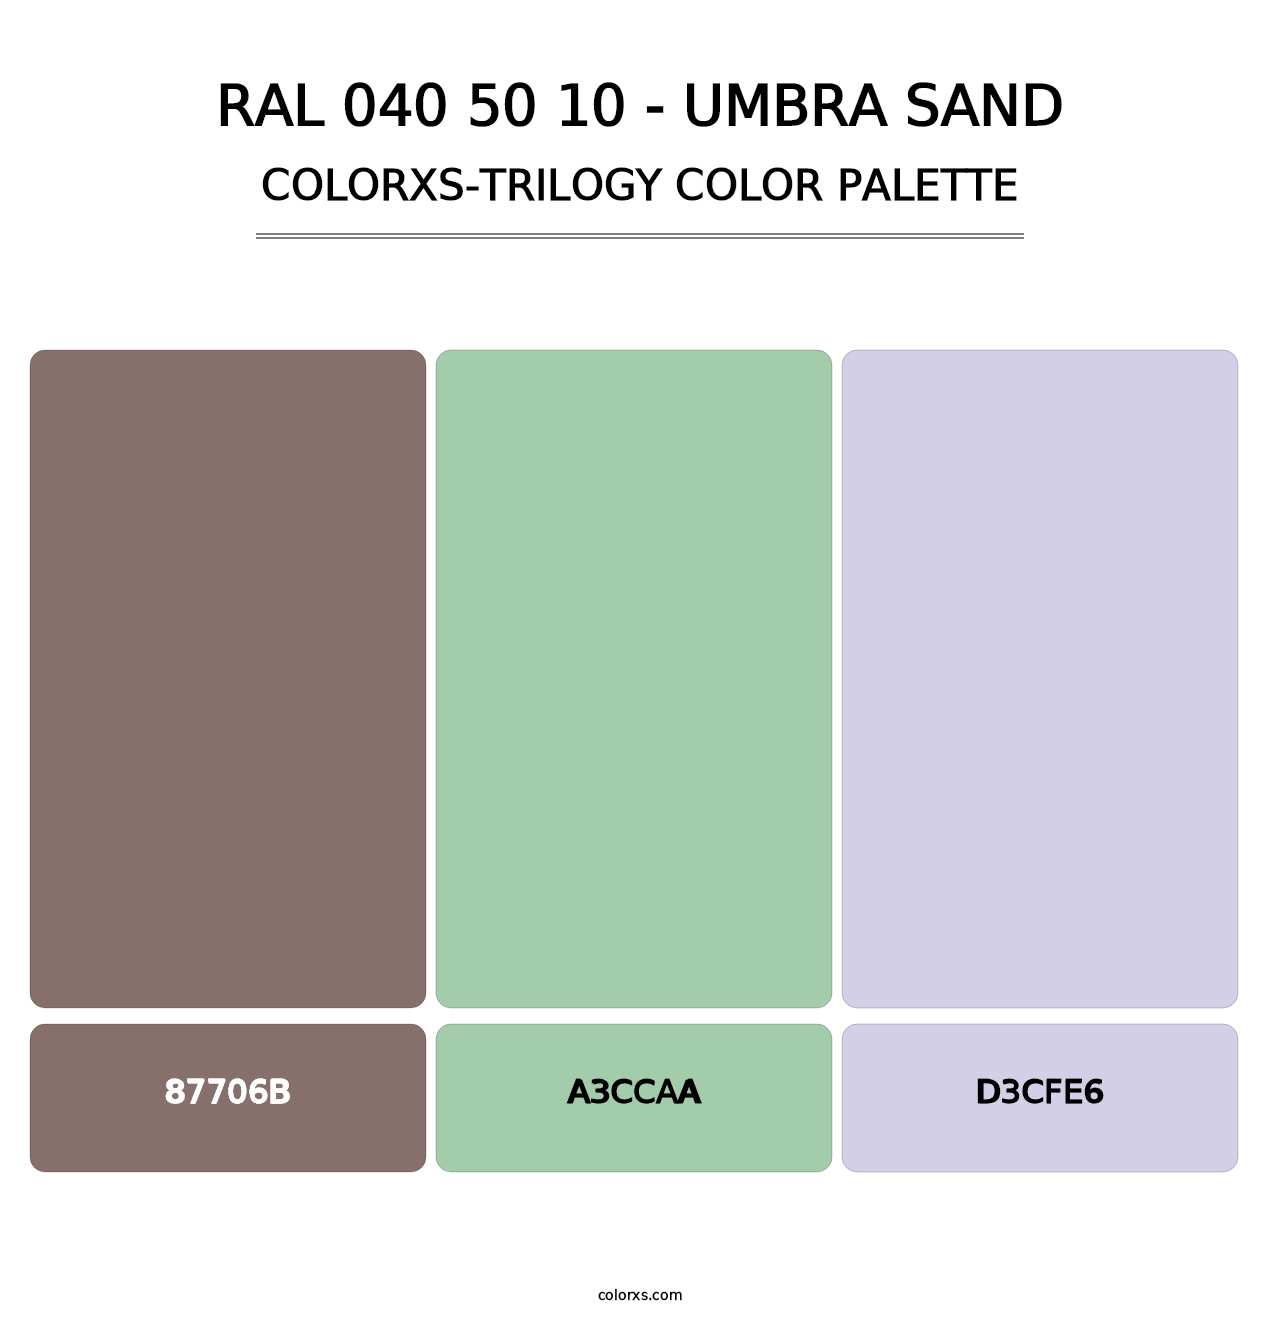 RAL 040 50 10 - Umbra Sand - Colorxs Trilogy Palette